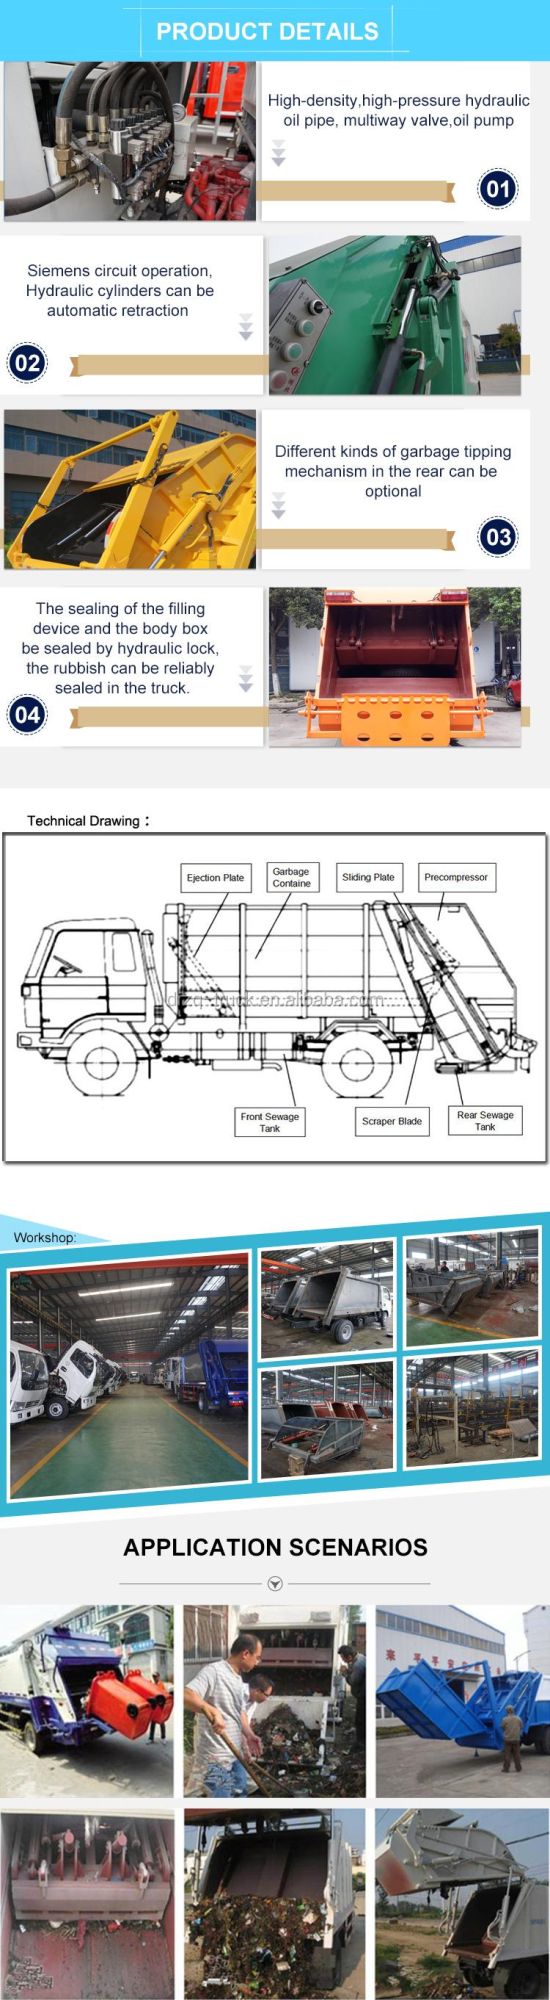 Medium Heavy Duty 4X2 10cbm Garbage Truck 3950mm Wheelbase Diesel Engine Rubbish Lorry